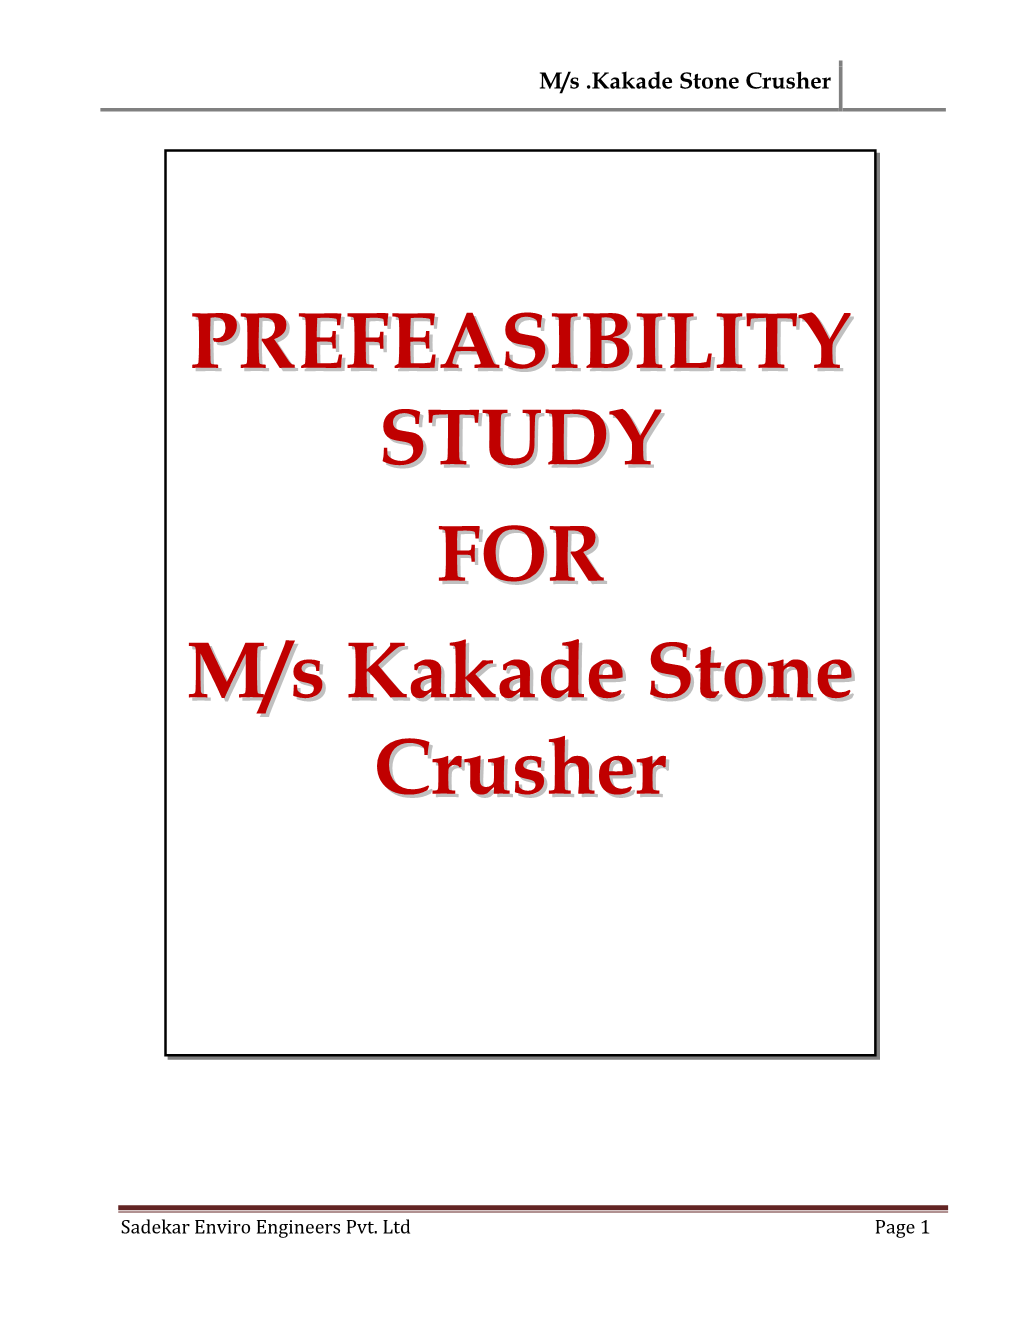 PREFEASIBILITY STUDY for M/S Kakade Stone Crusher